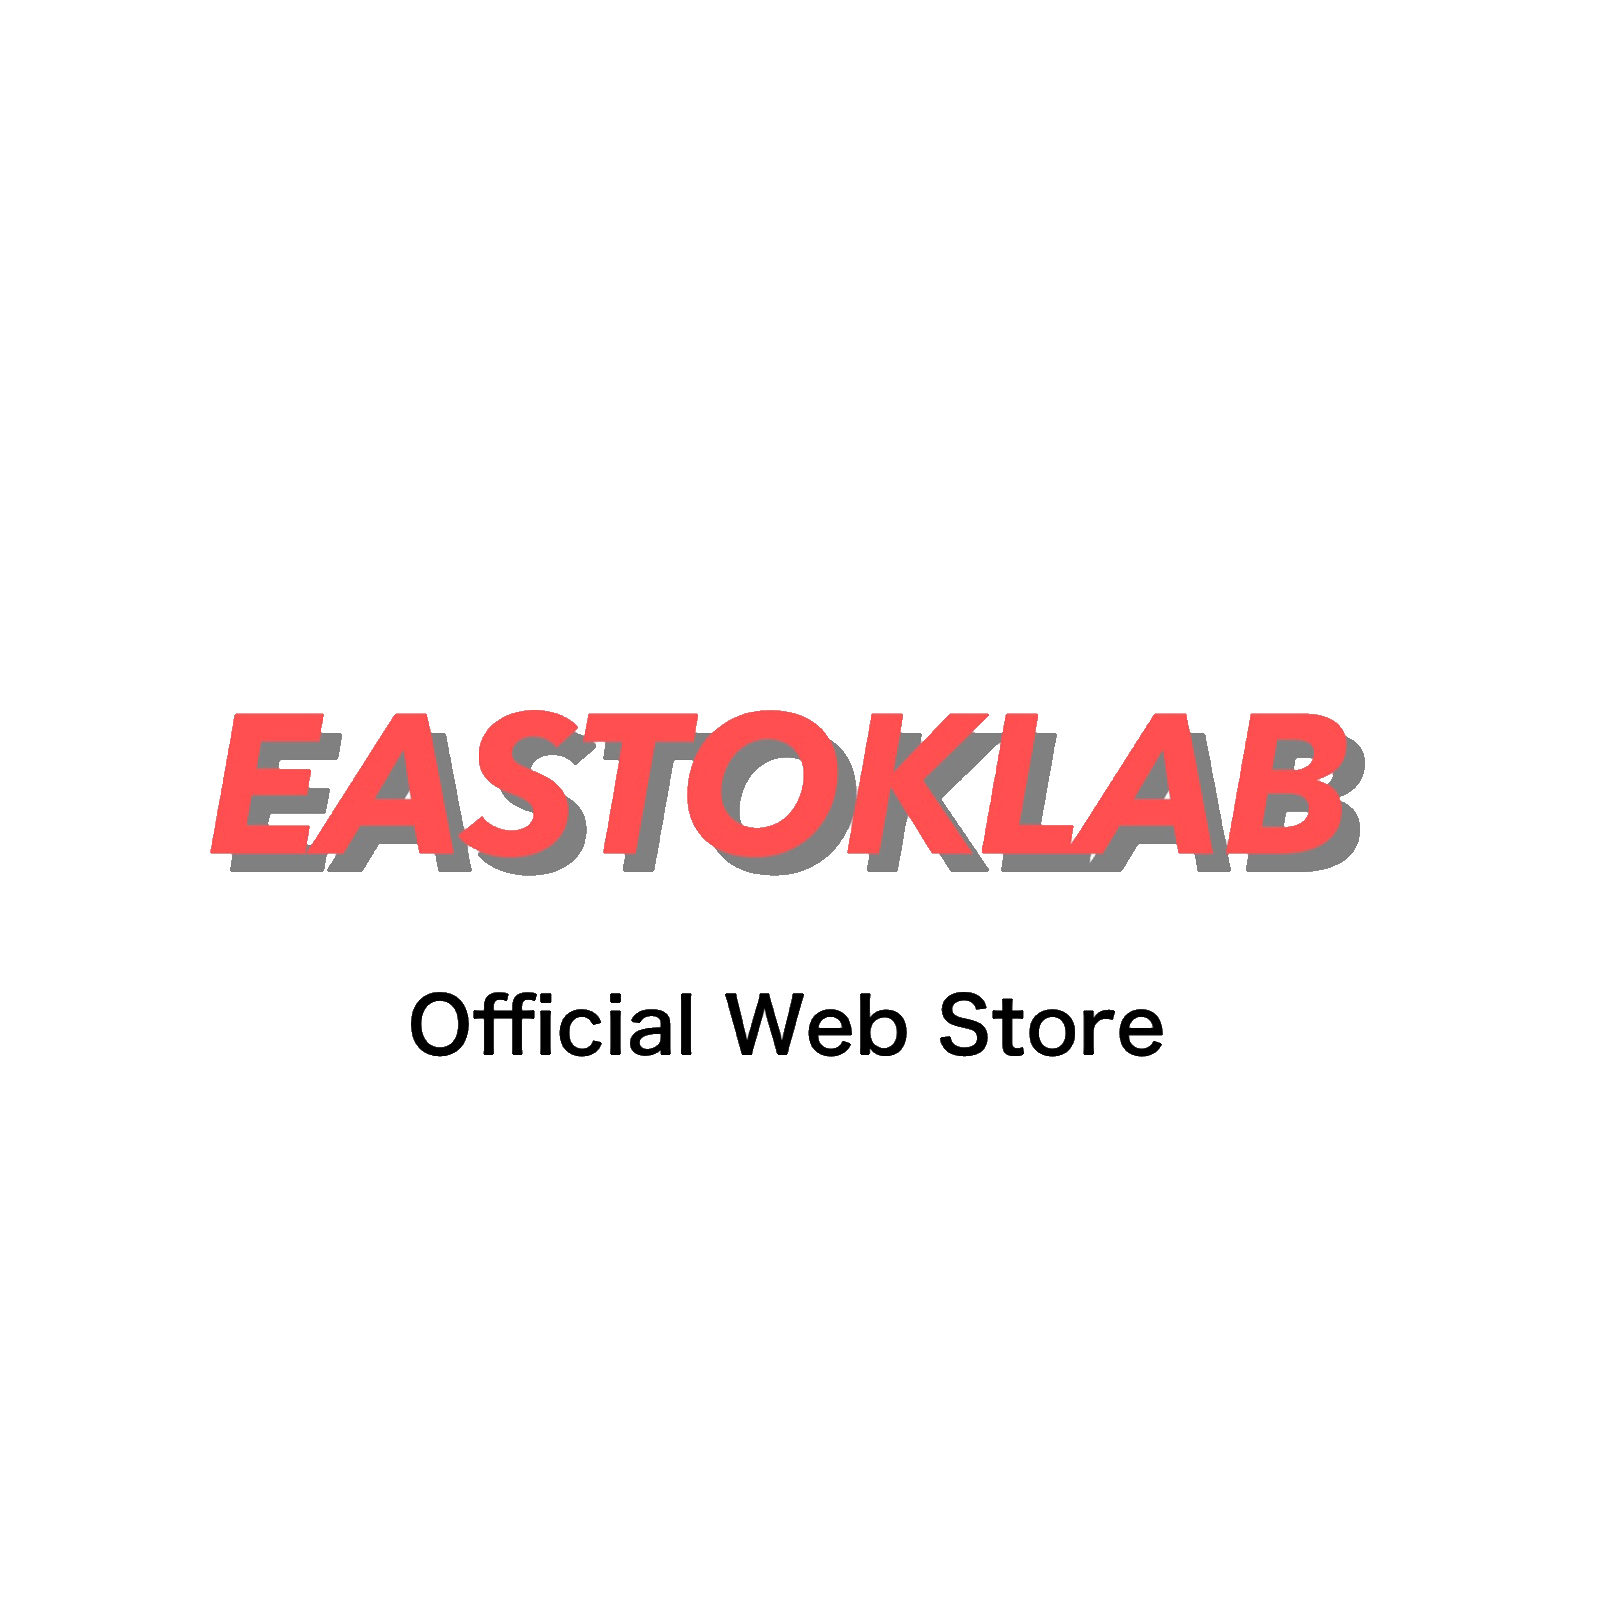 EASTOKLAB WEB STORE